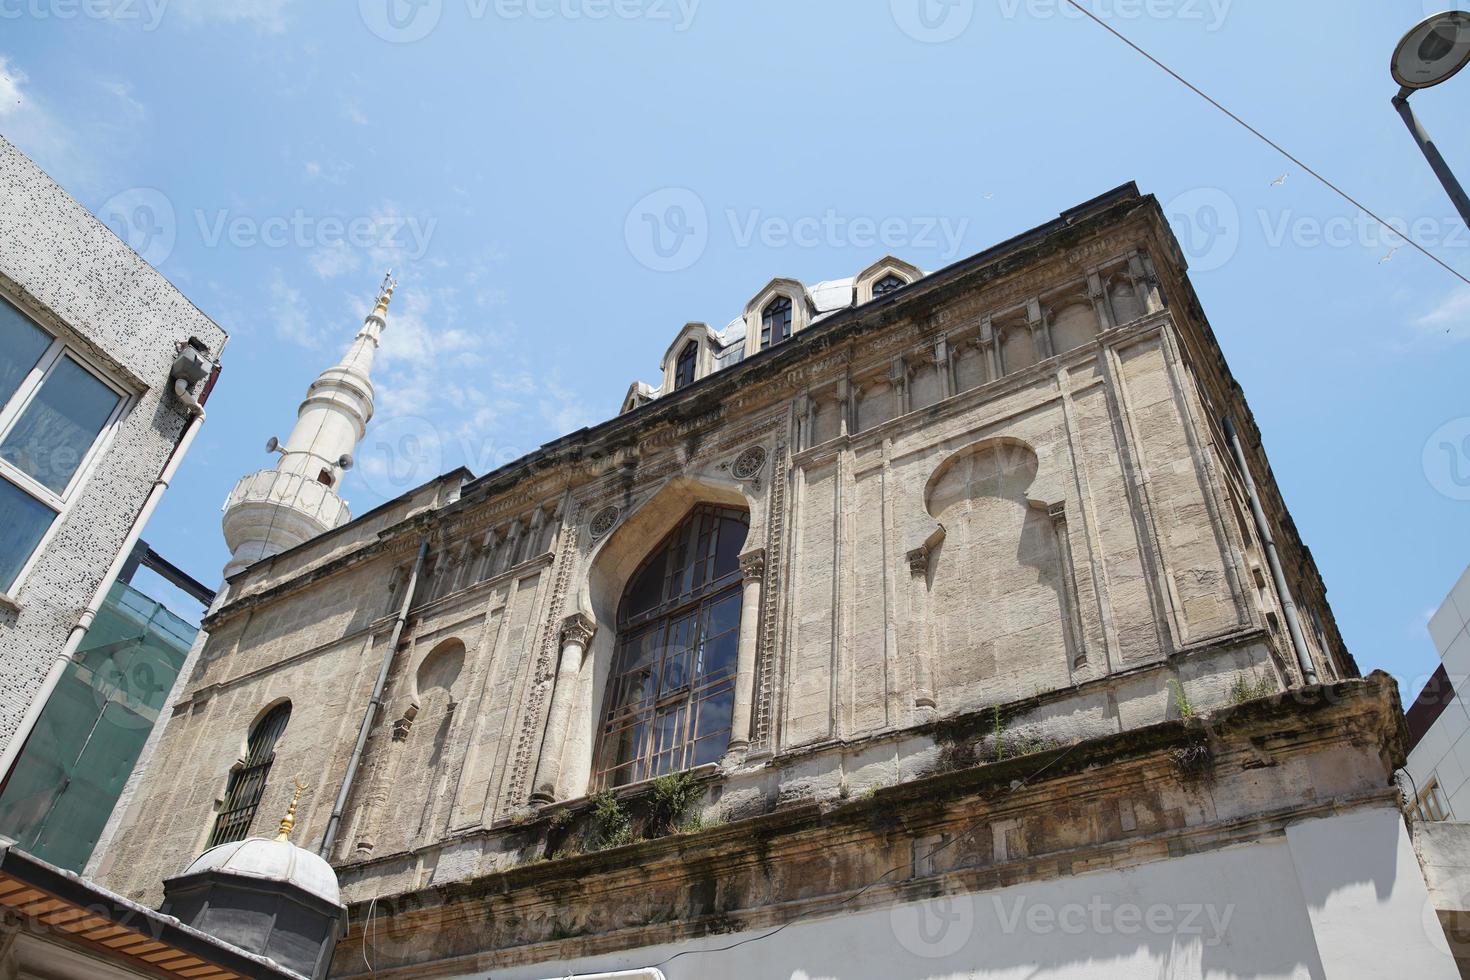 hidayet moskee in Eminonu wijk, Istanbul, turkiye foto